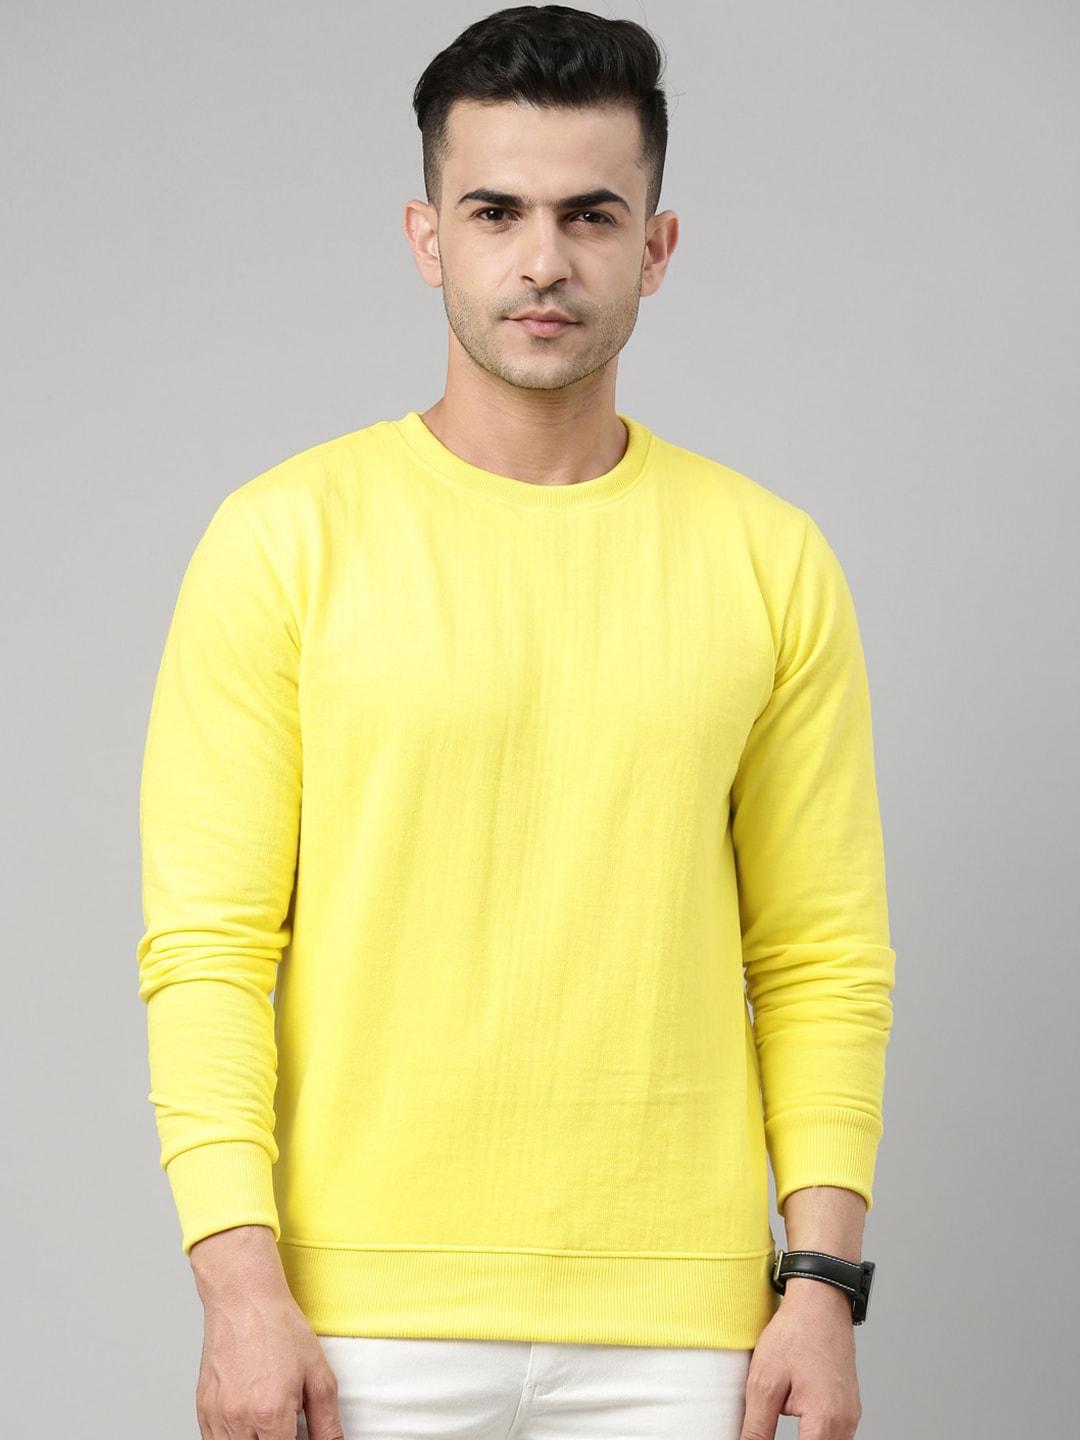 bushirt-men-yellow-pure-cotton-sweatshirt